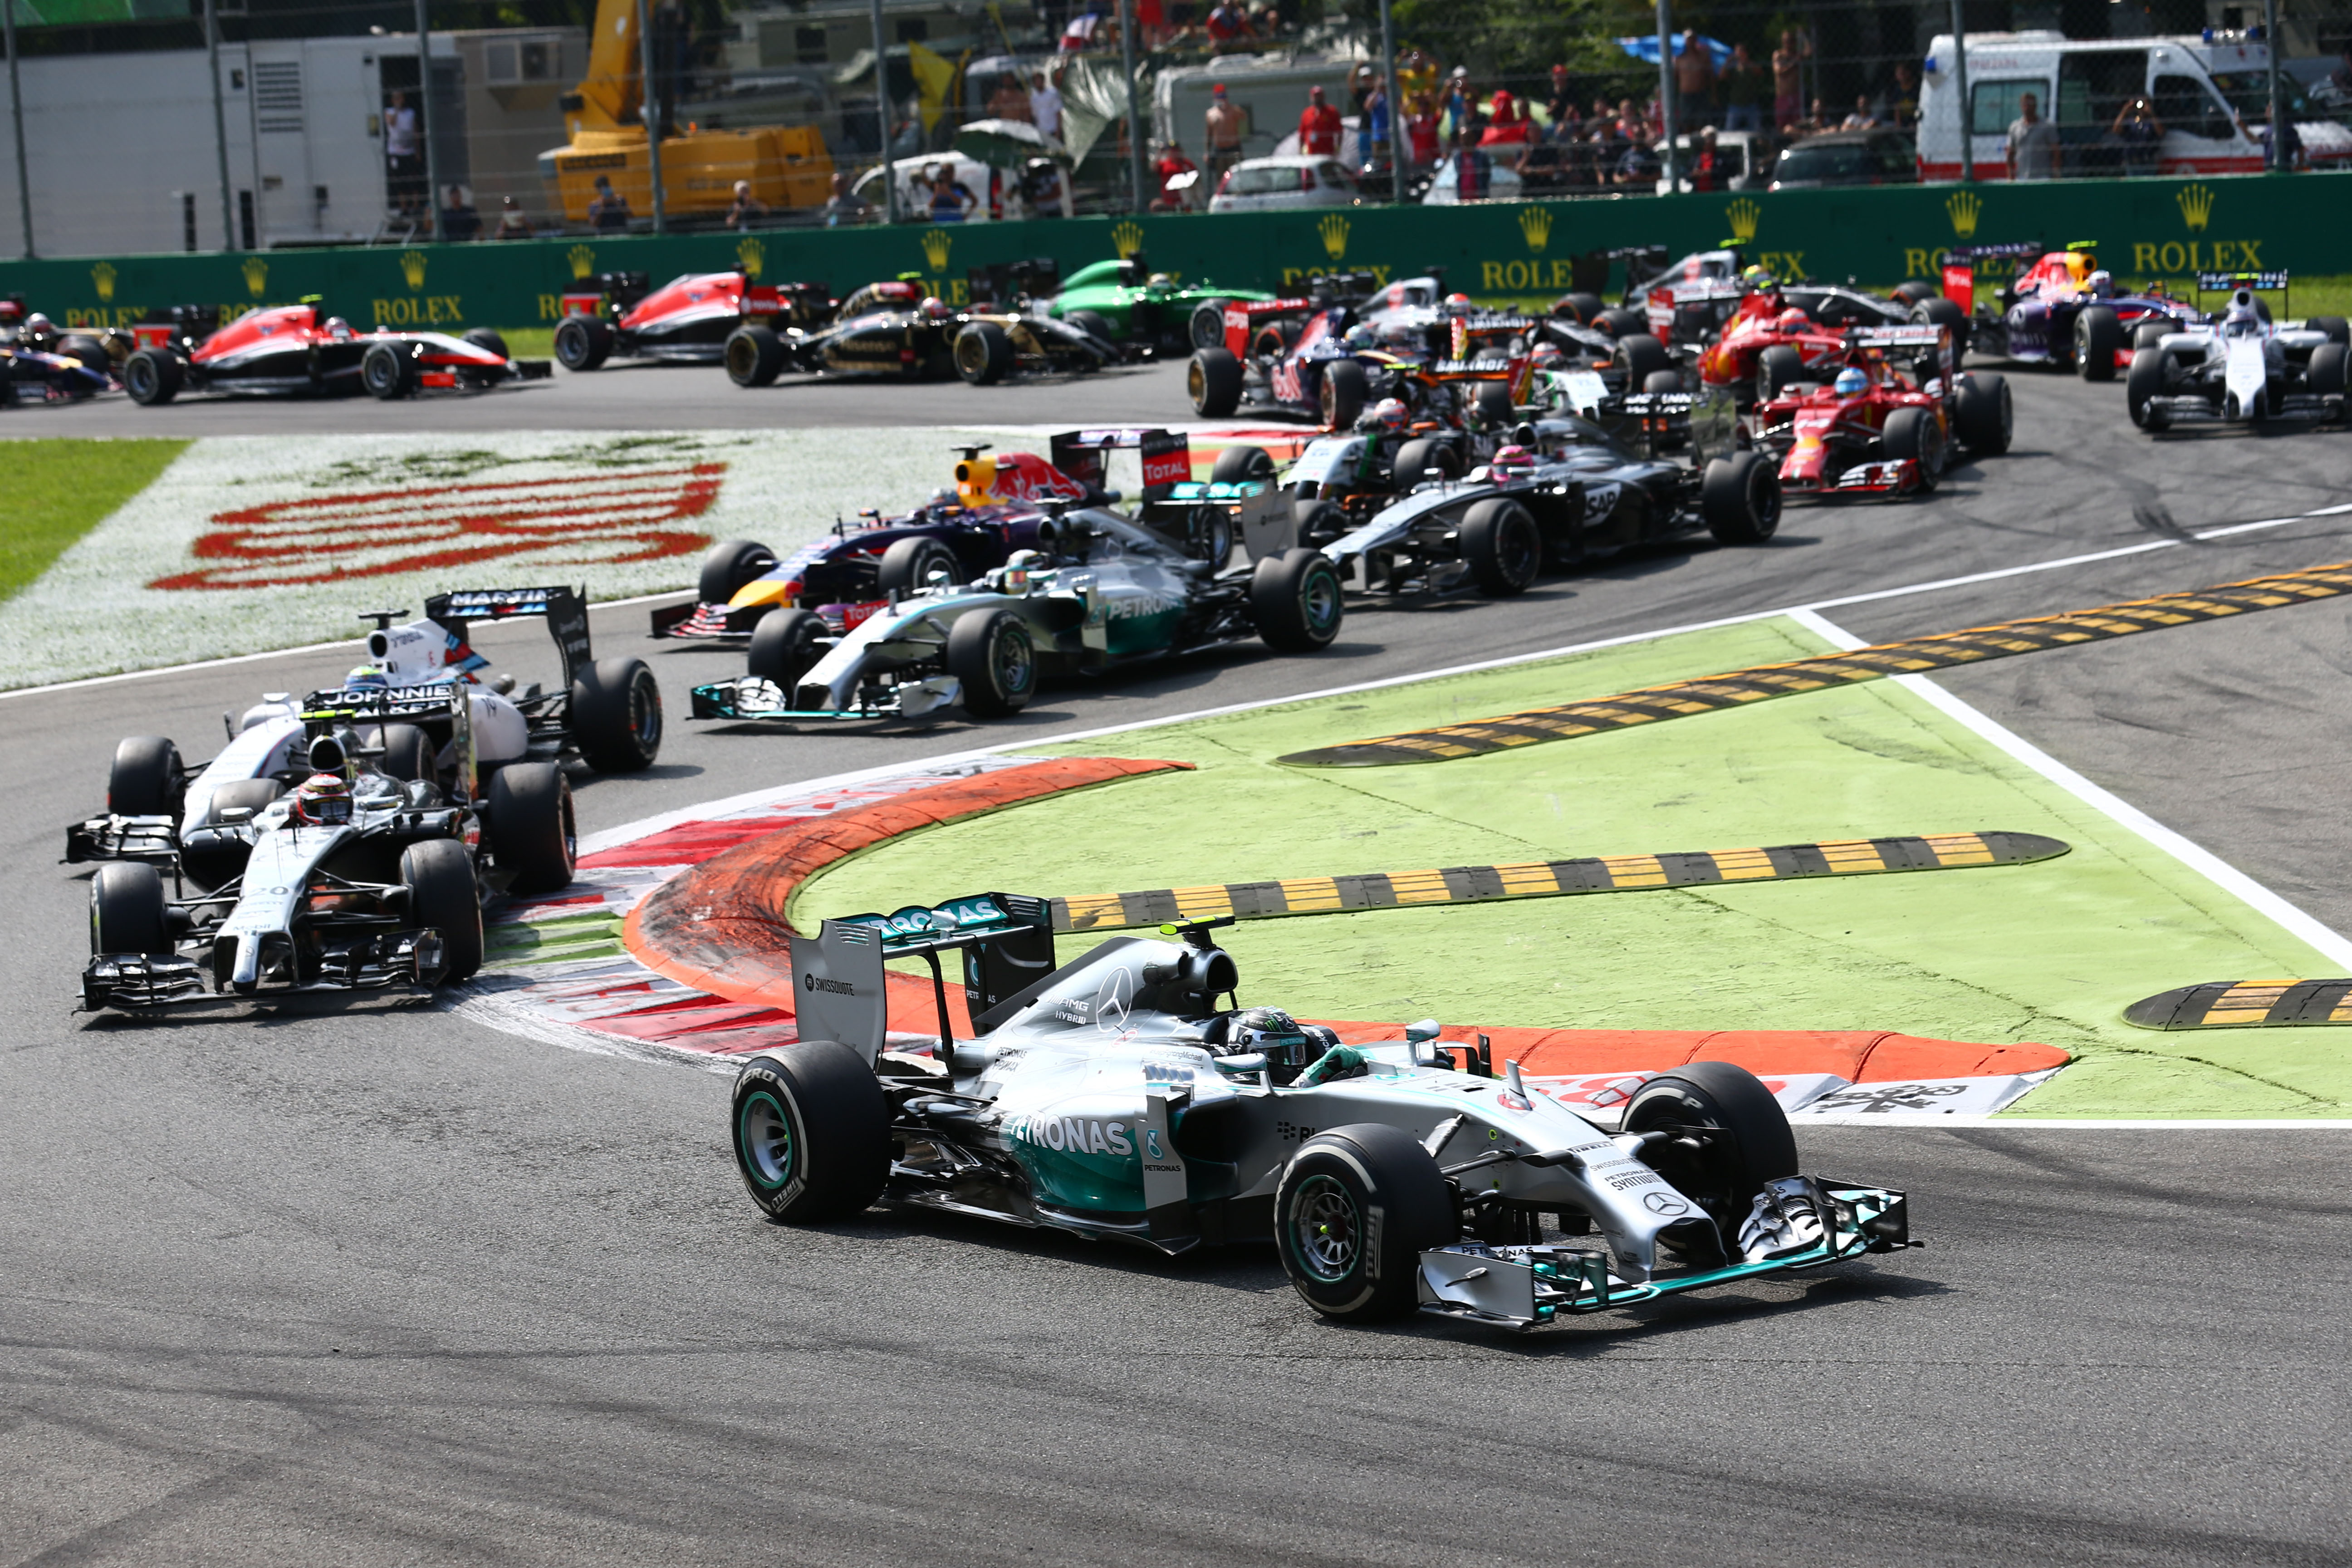 Race: Hamilton neemt revanche en wint